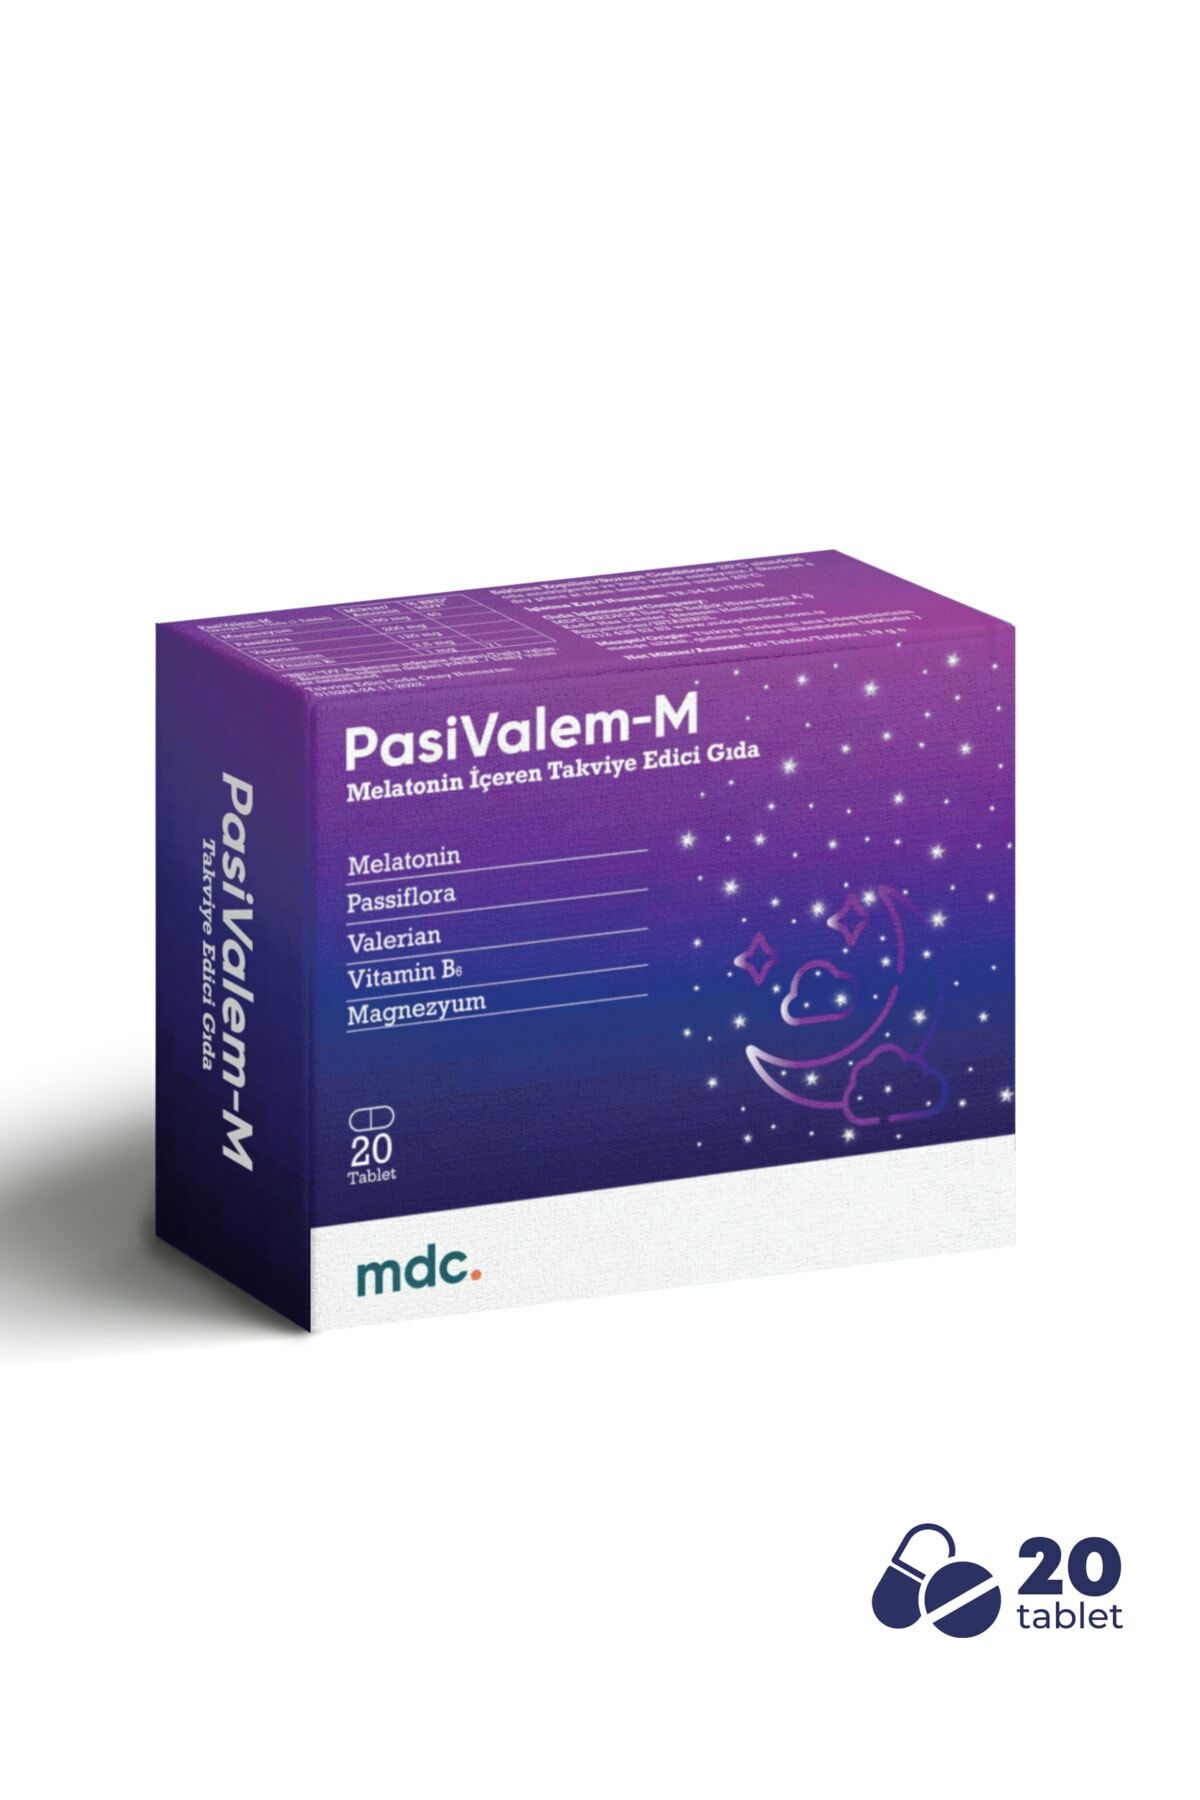 Mdc Pasivalem-M Melatonin 2,5 mg Passiflora Valerian Vit B6 Magnesium 20 Tablet